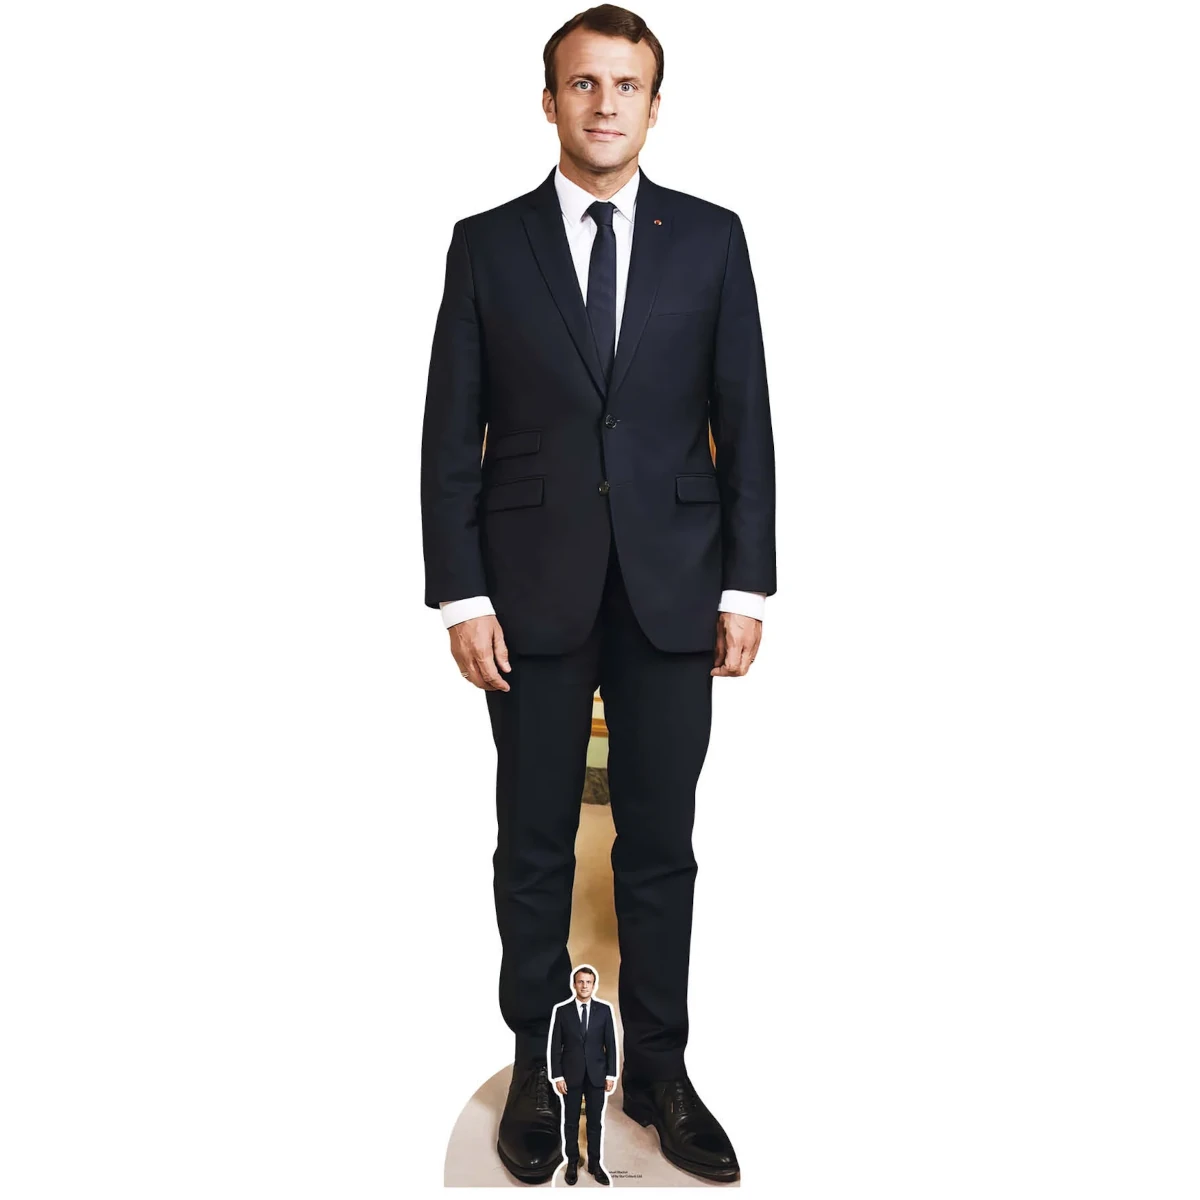 SC4076 Emmanuel Macron (French Politician) Lifesize + Mini Cardboard Cutout Standee Front